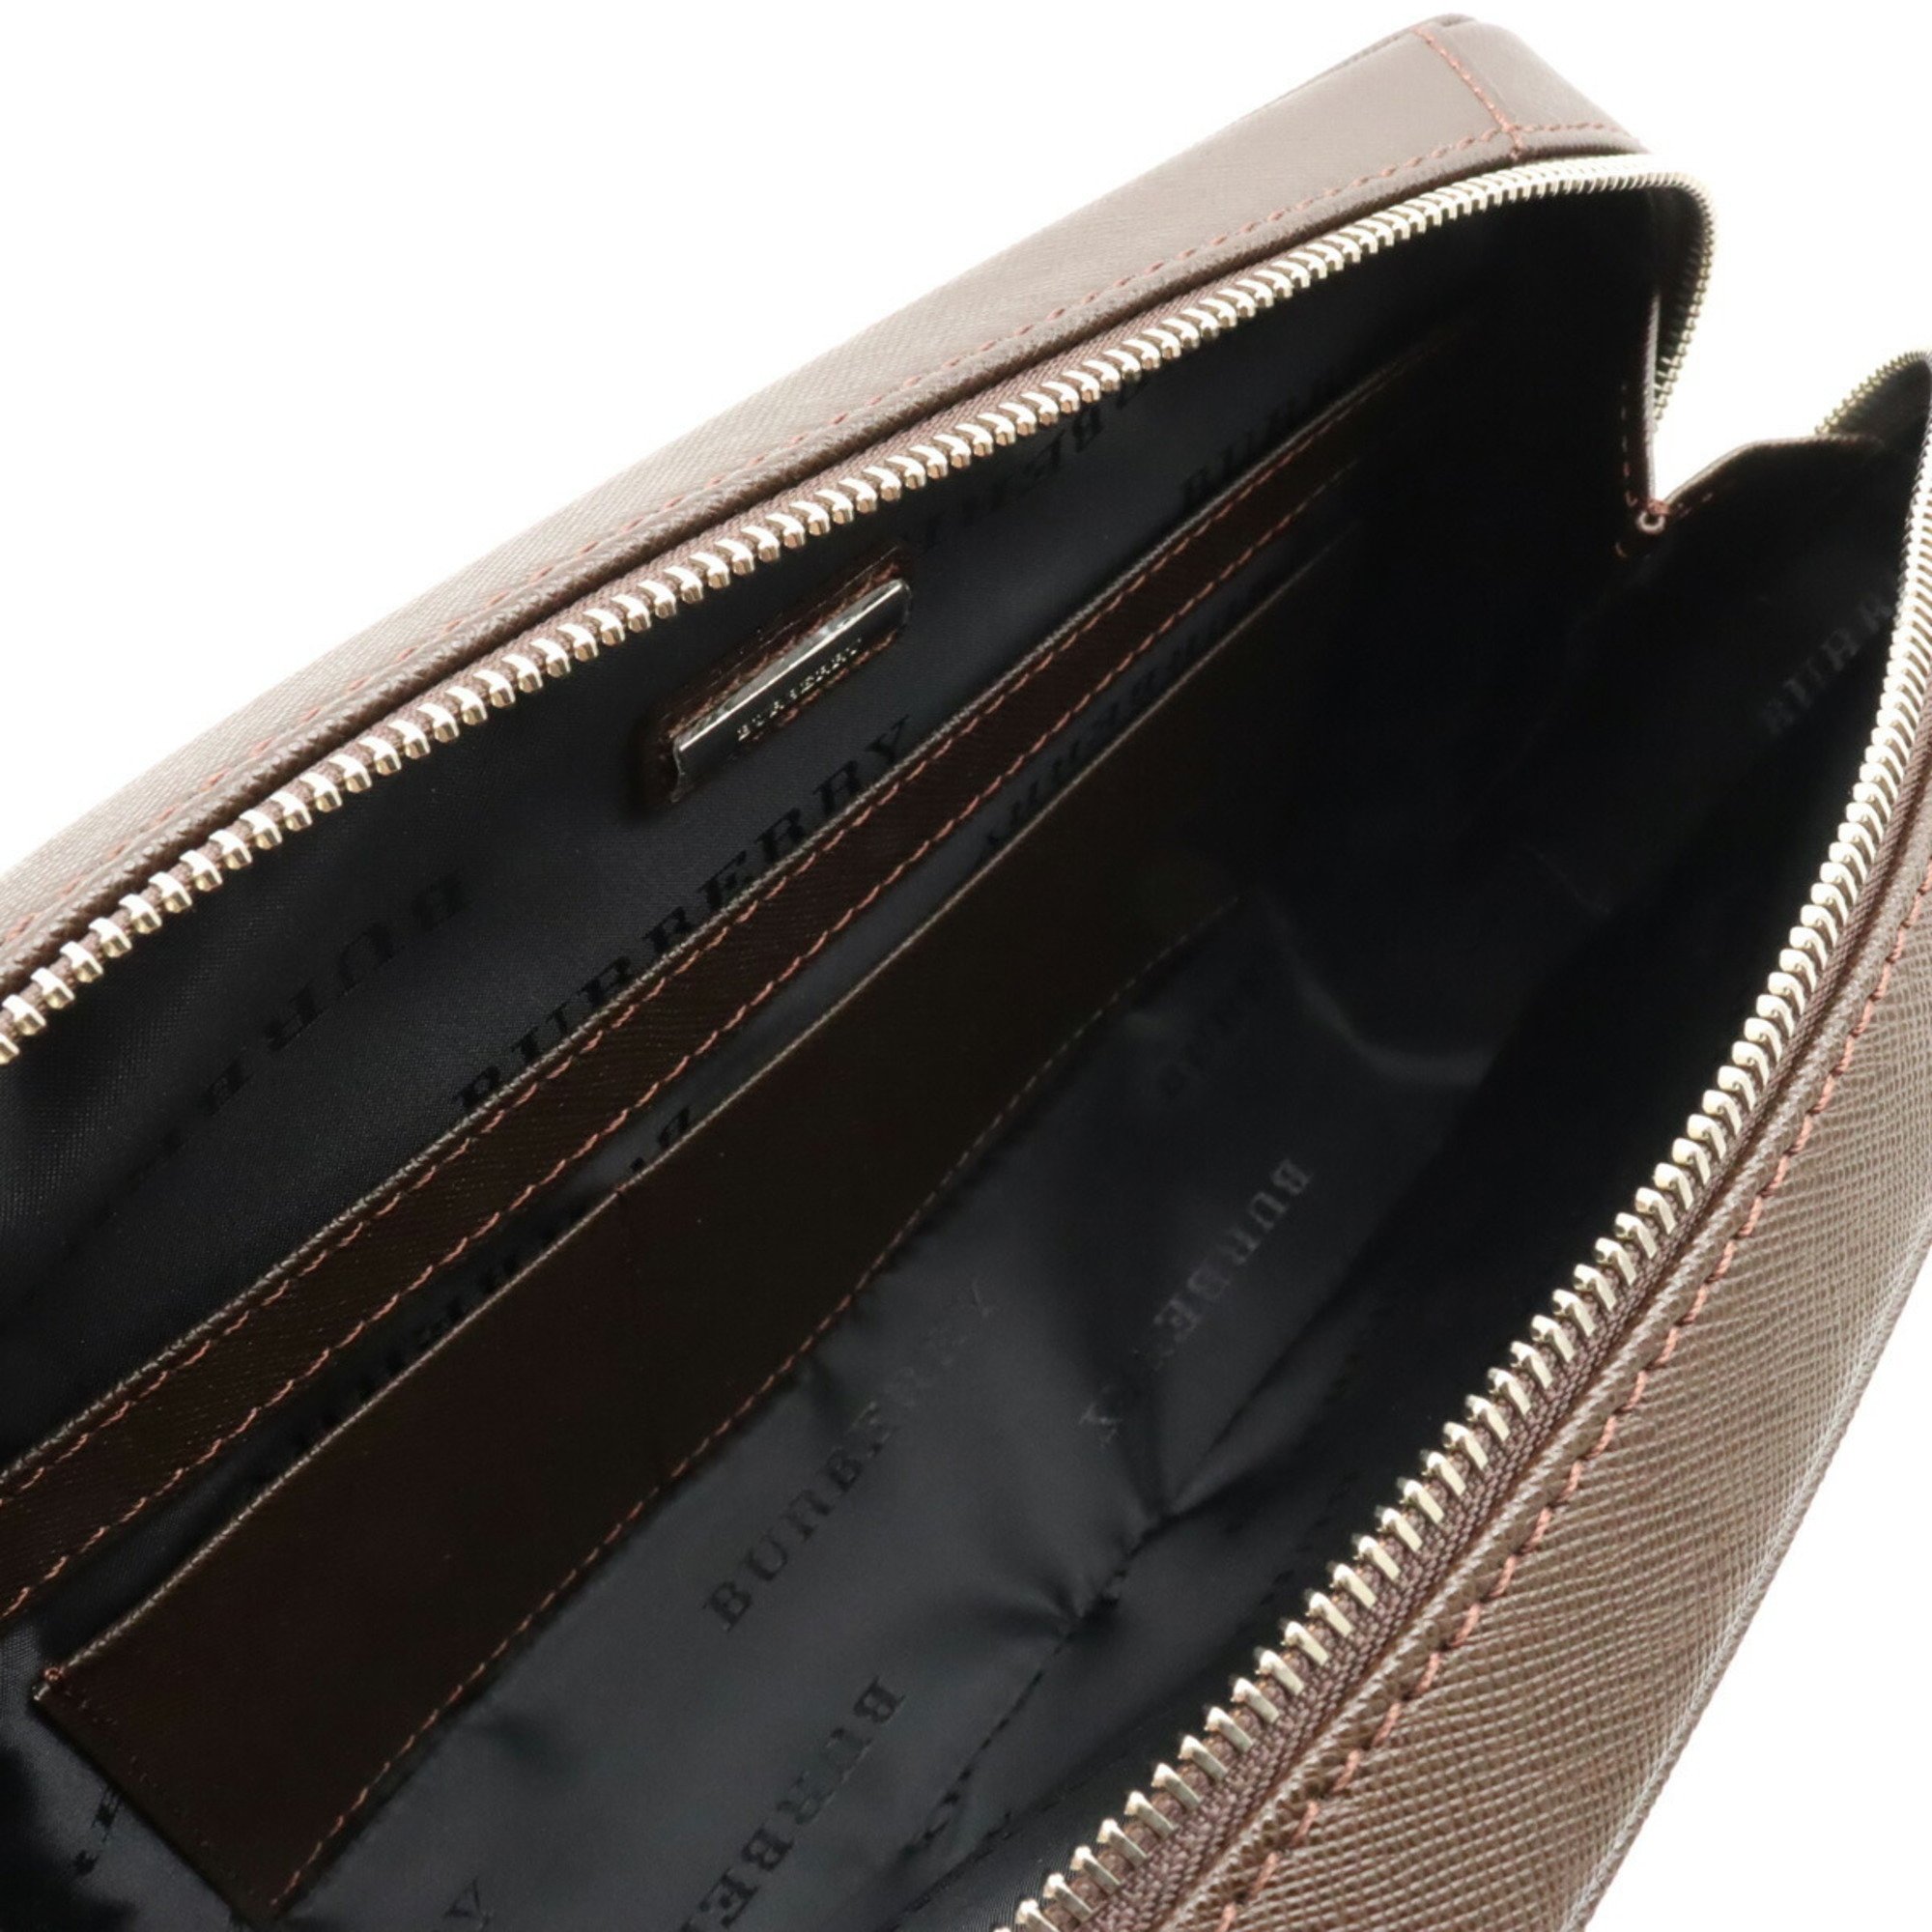 BURBERRY Men's Clutch Bag, Leather, Dark Brown